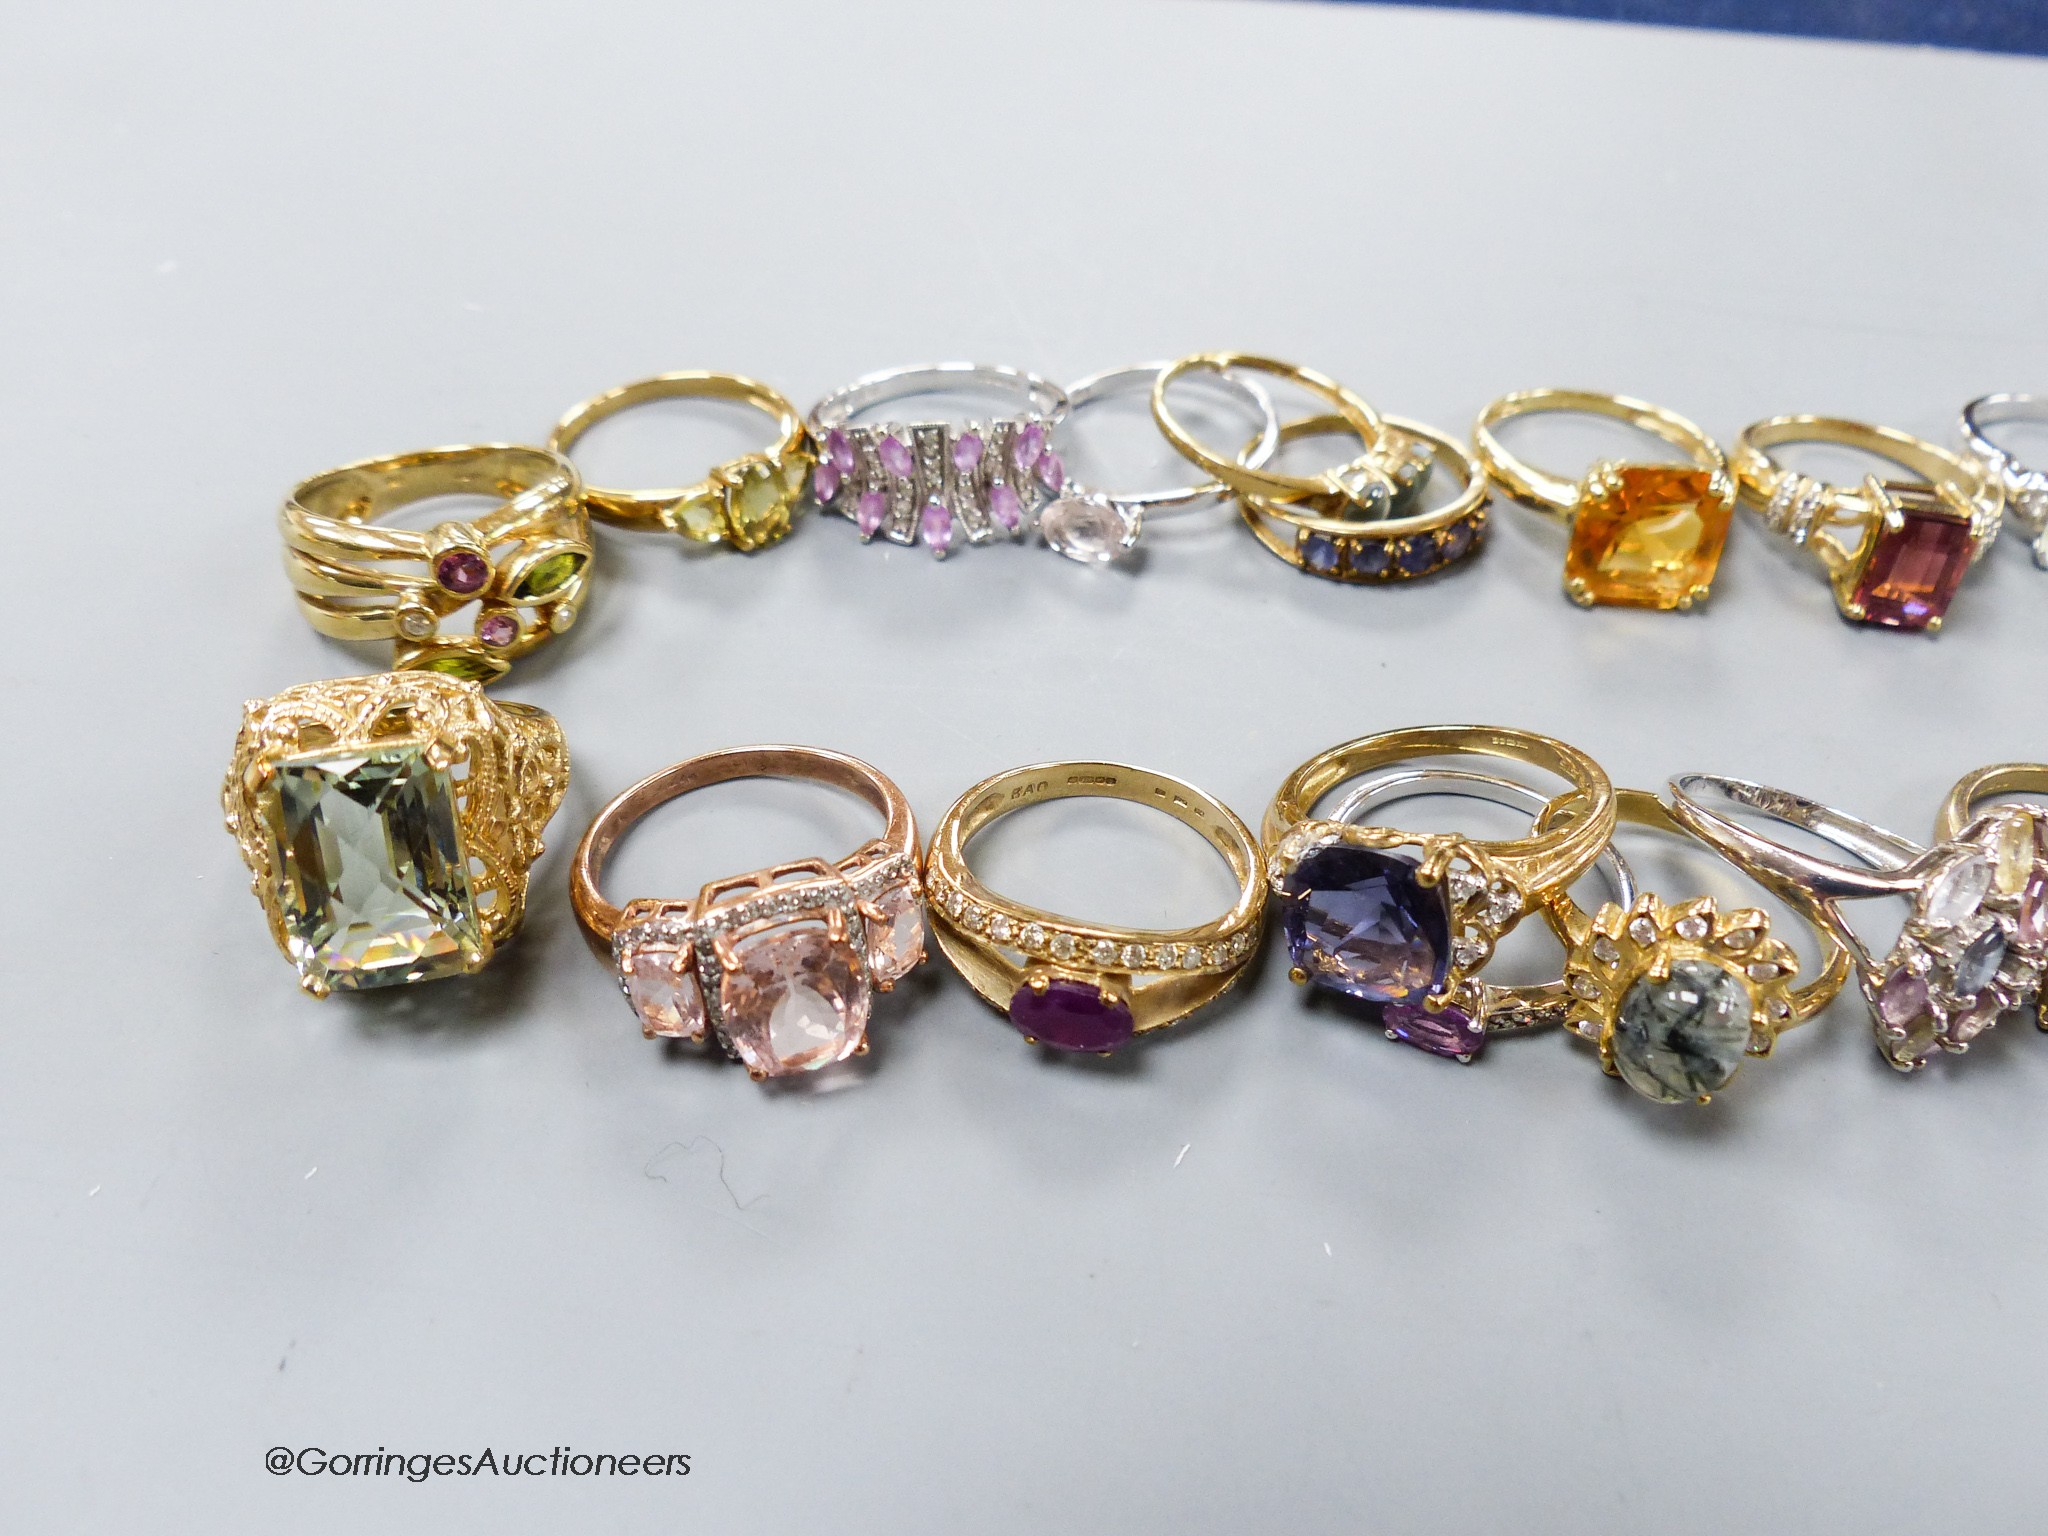 Twenty assorted modern 9ct or 9k and gem set dress rings, gross 65.5 grams.